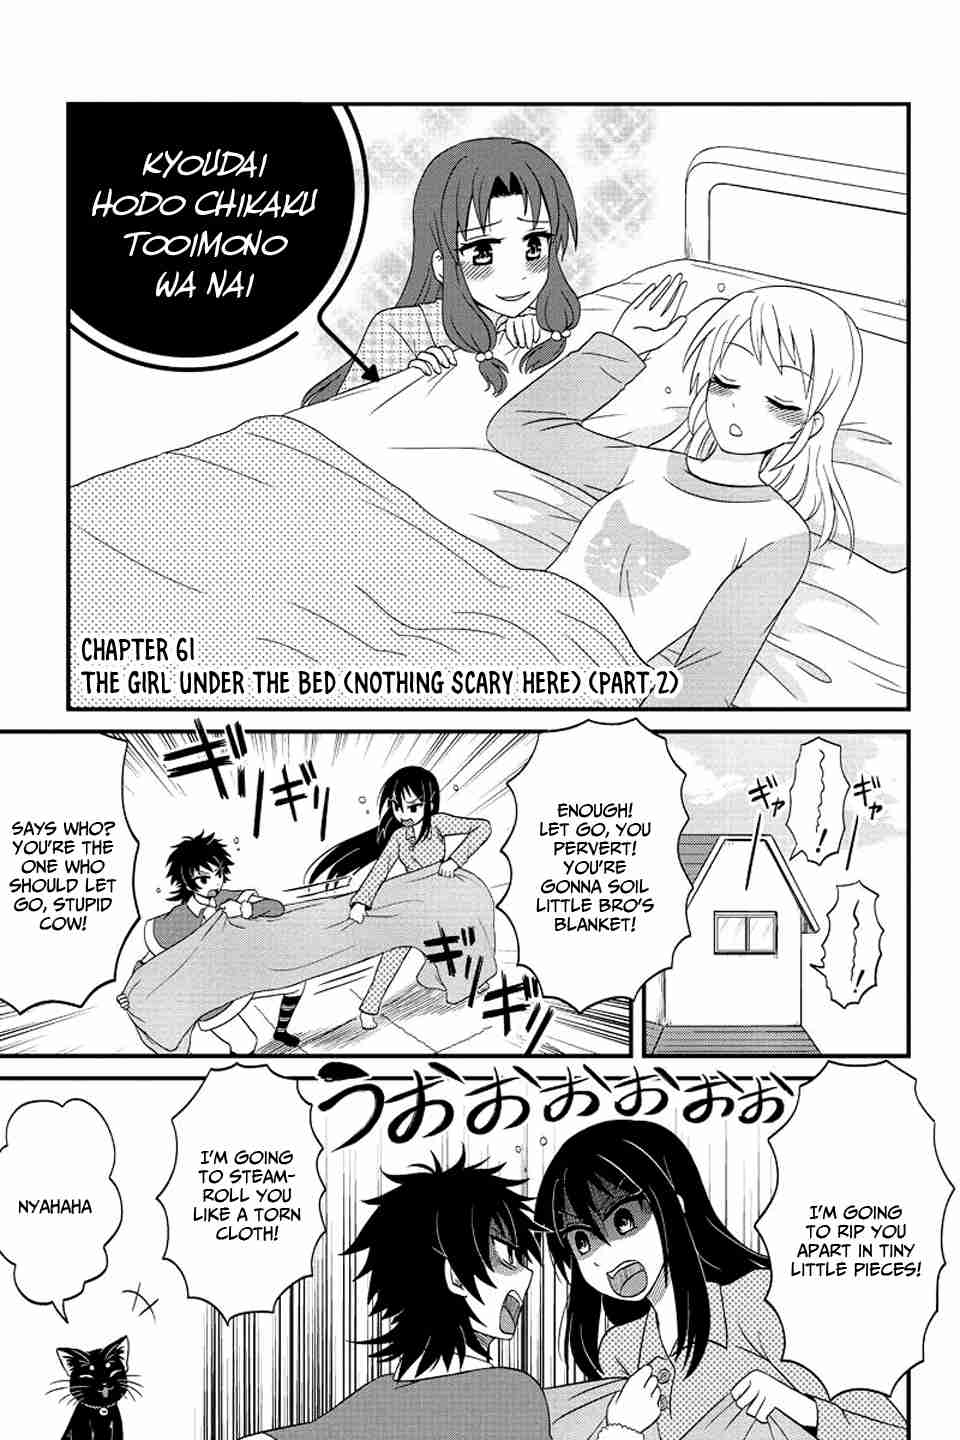 Kyoudai hodo Chikaku Tooimono wa Nai Vol. 4 Ch. 61 The girl under the bed (Nothing scary here) (Part 2)